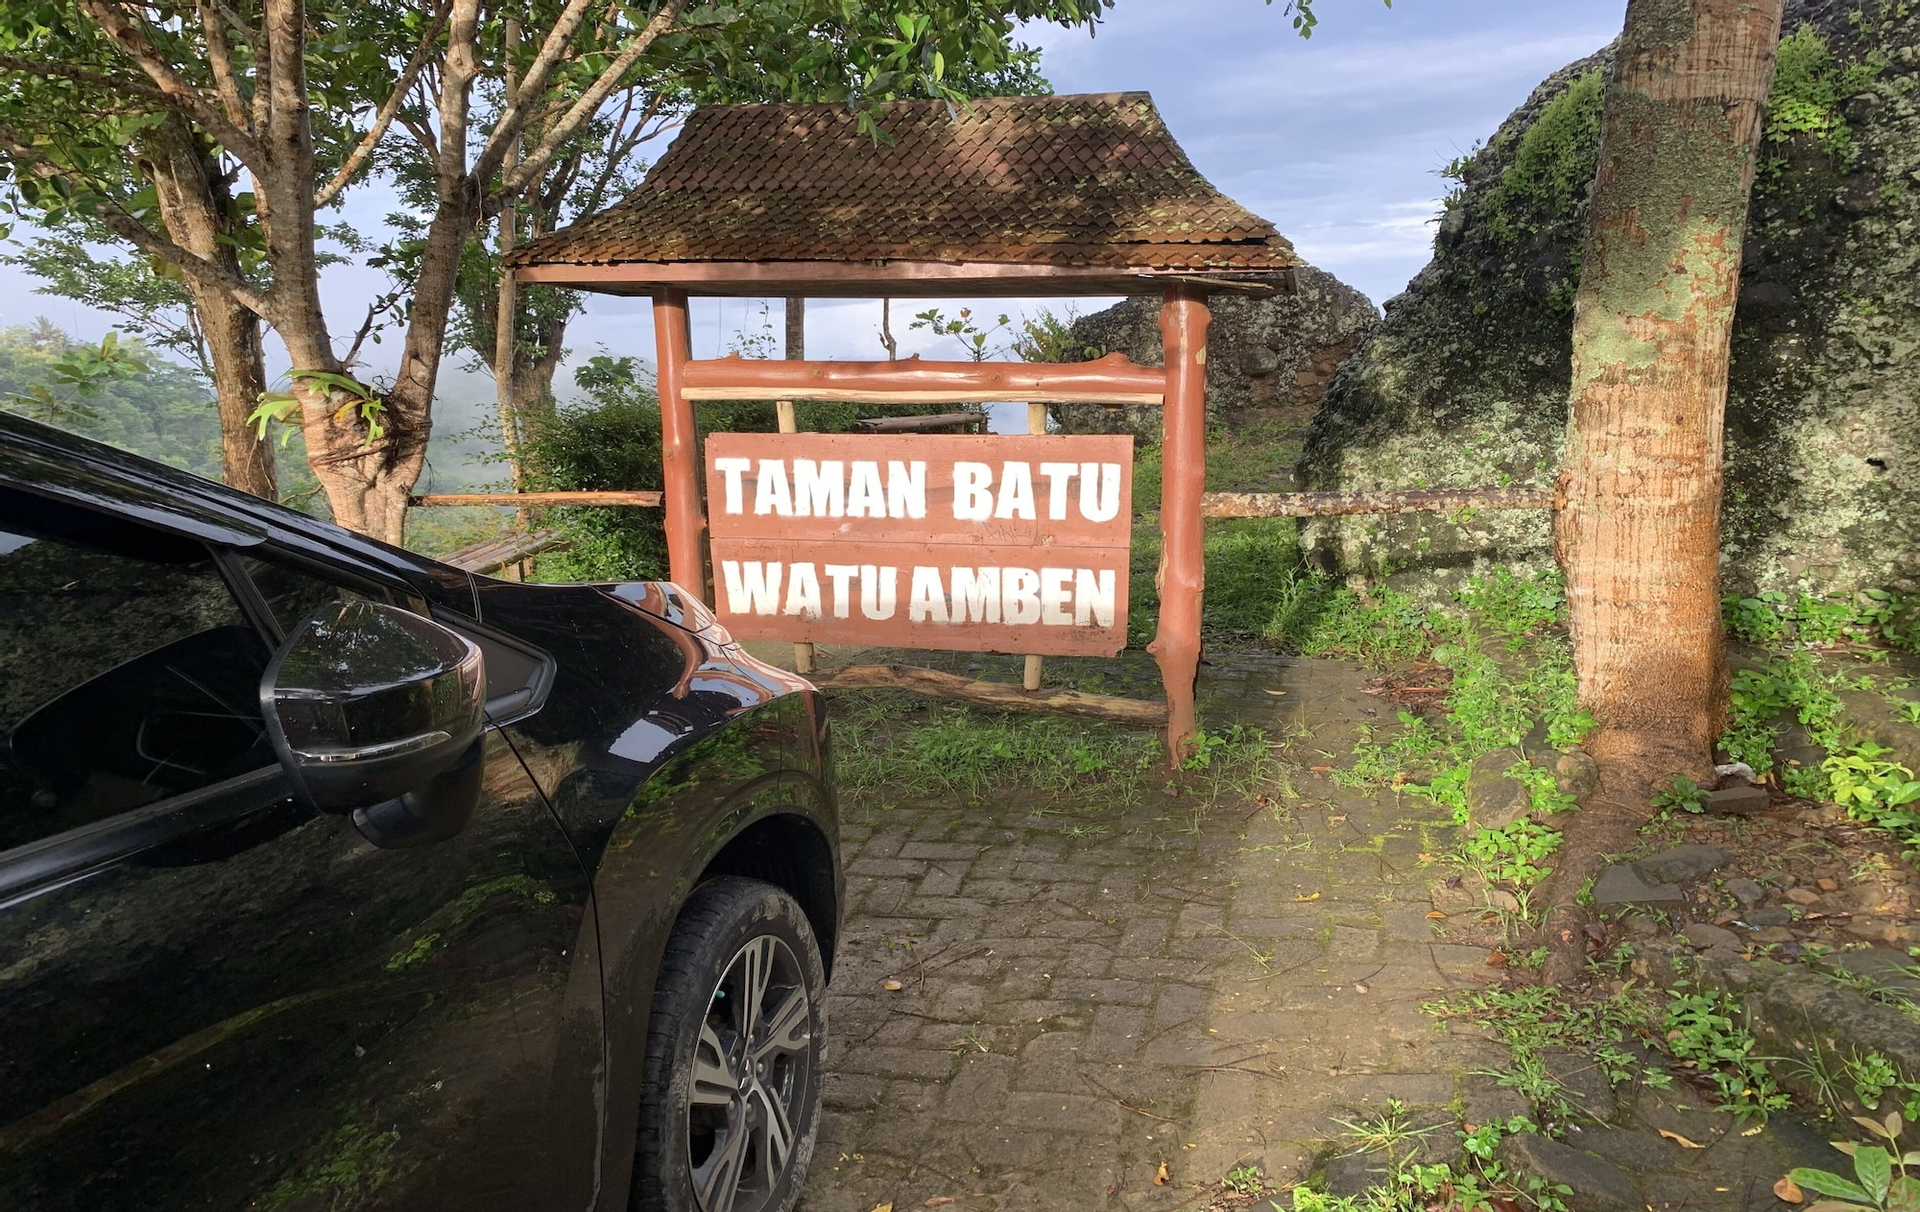 Exterior & Views 5, Camping Ground Watu Amben, Bantul